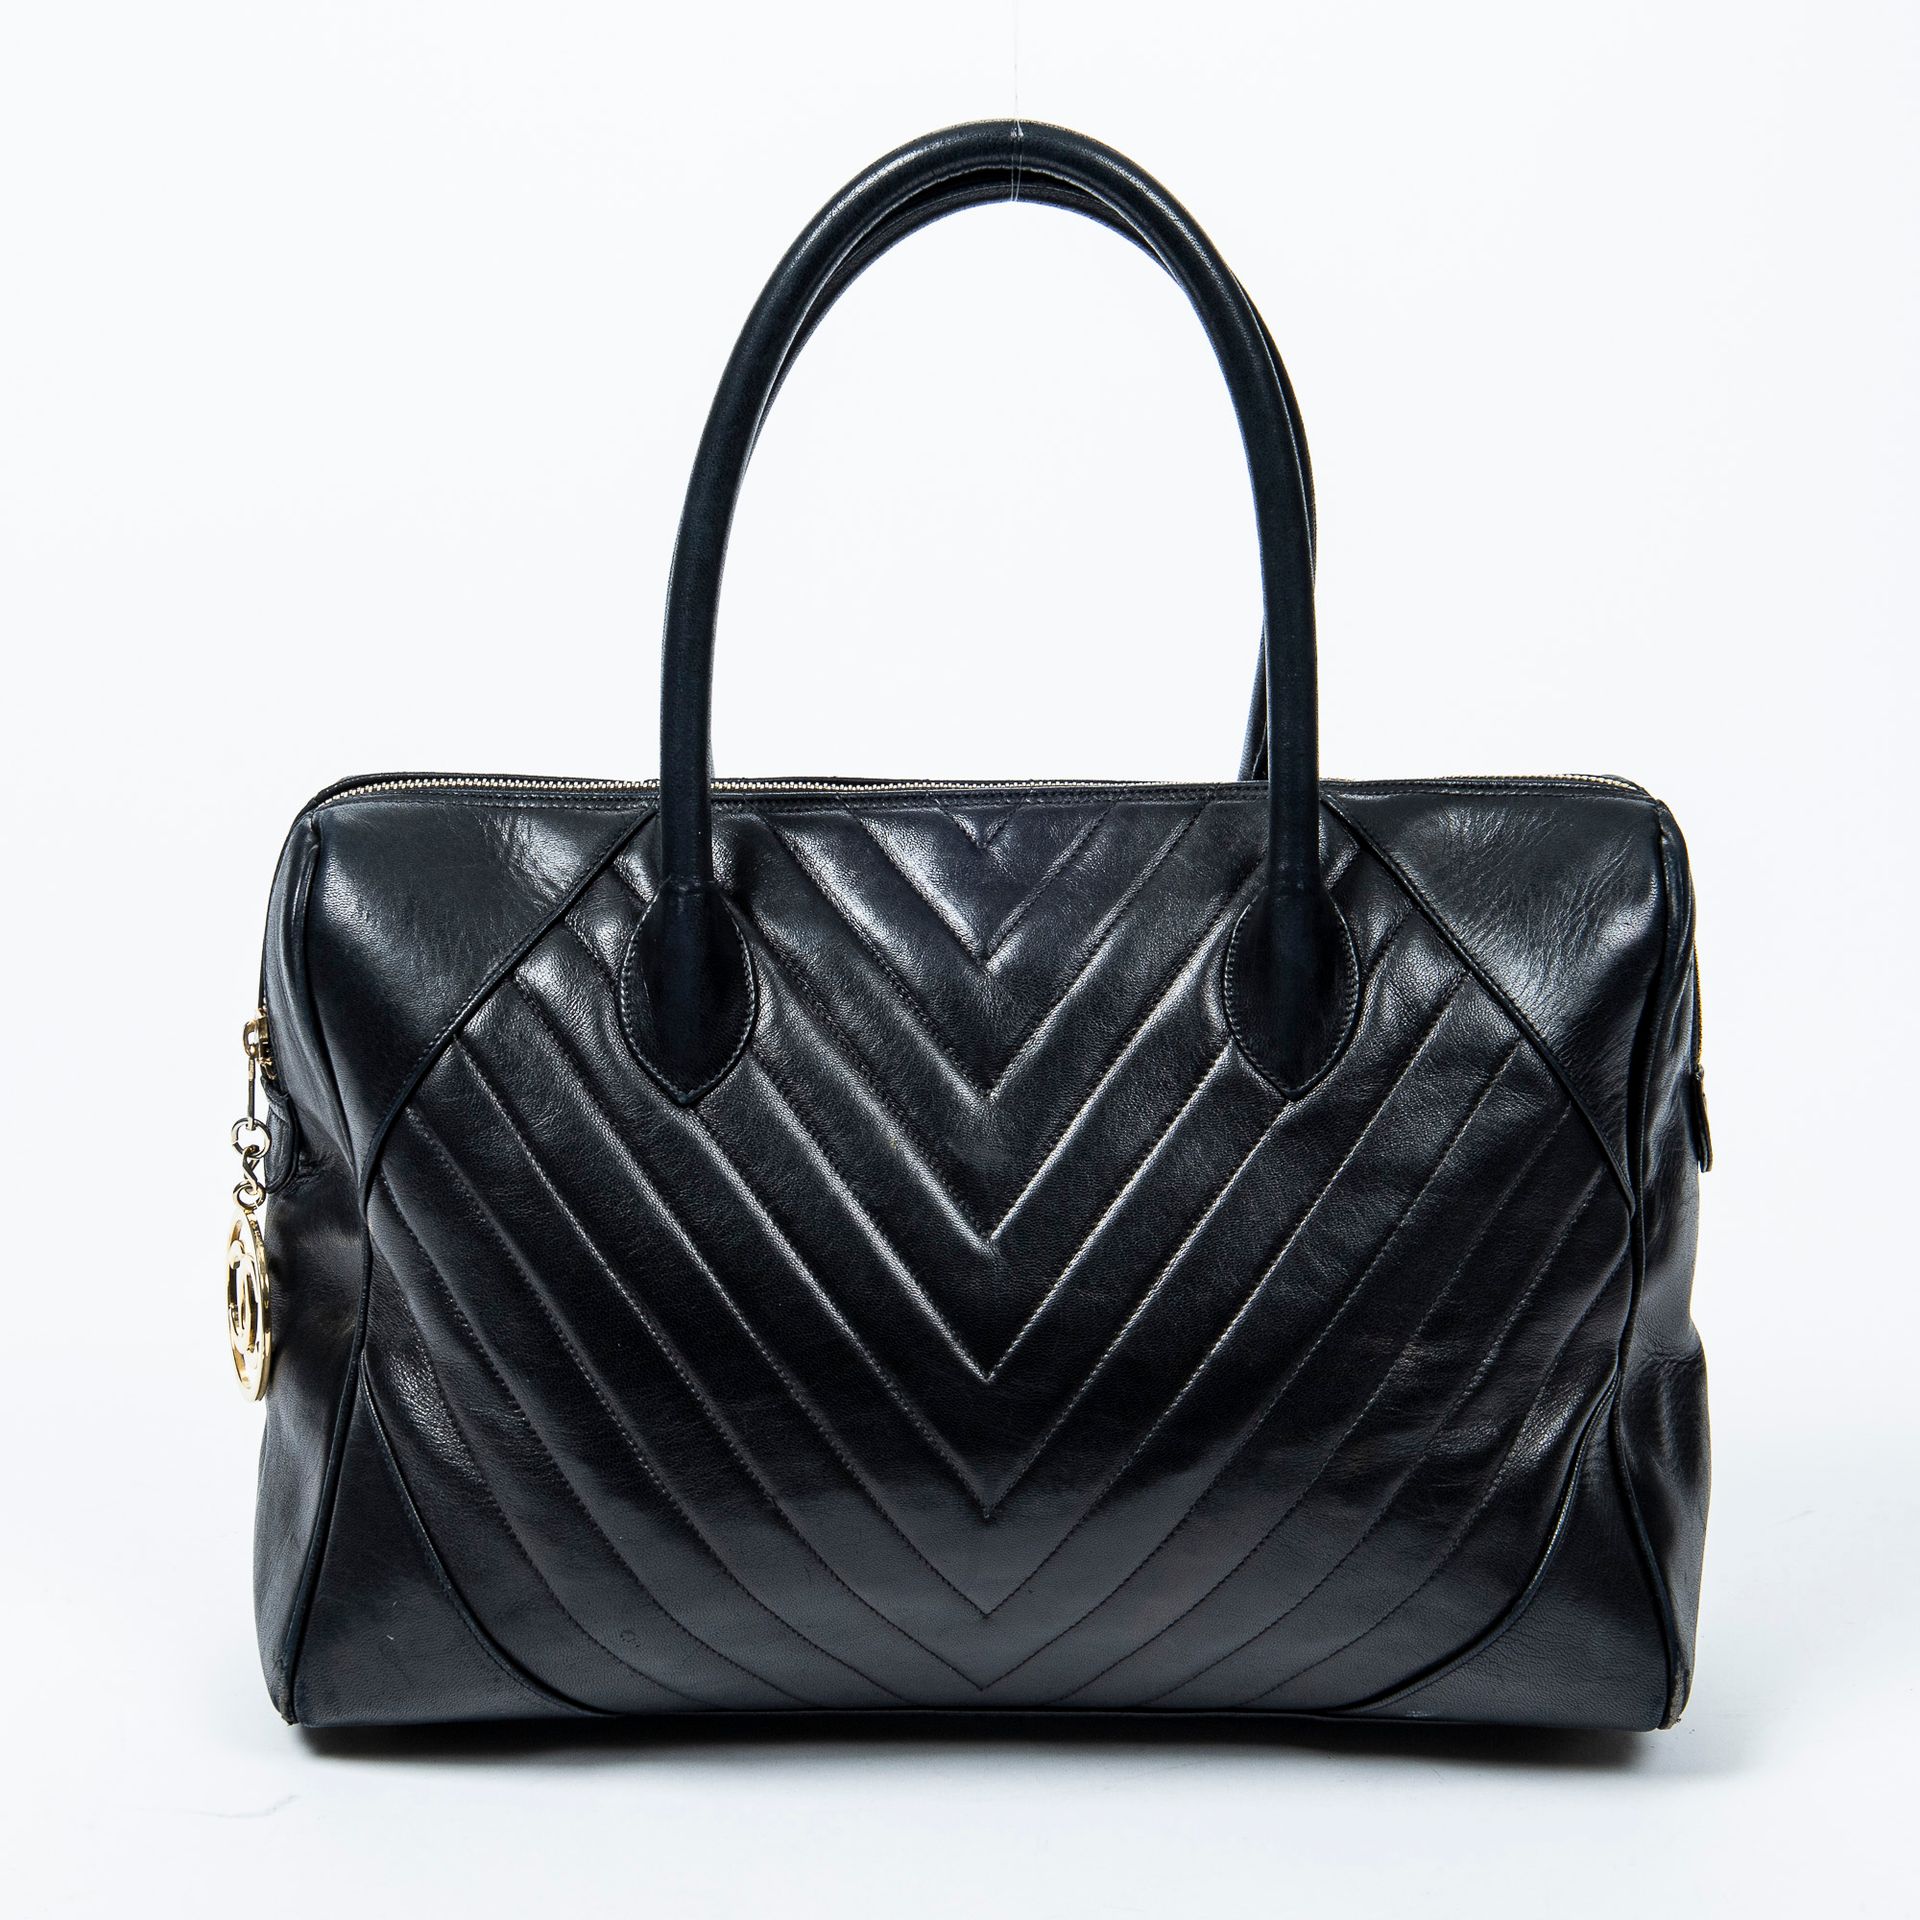 Chanel 香奈儿 - 黑色小羊皮手袋，长方形，人字形图案 - 黑色乙烯基内衬 - 拉链开合 - 两个手柄 - 镀金金属装饰 - 有真品编号 - 尺寸：35x&hellip;